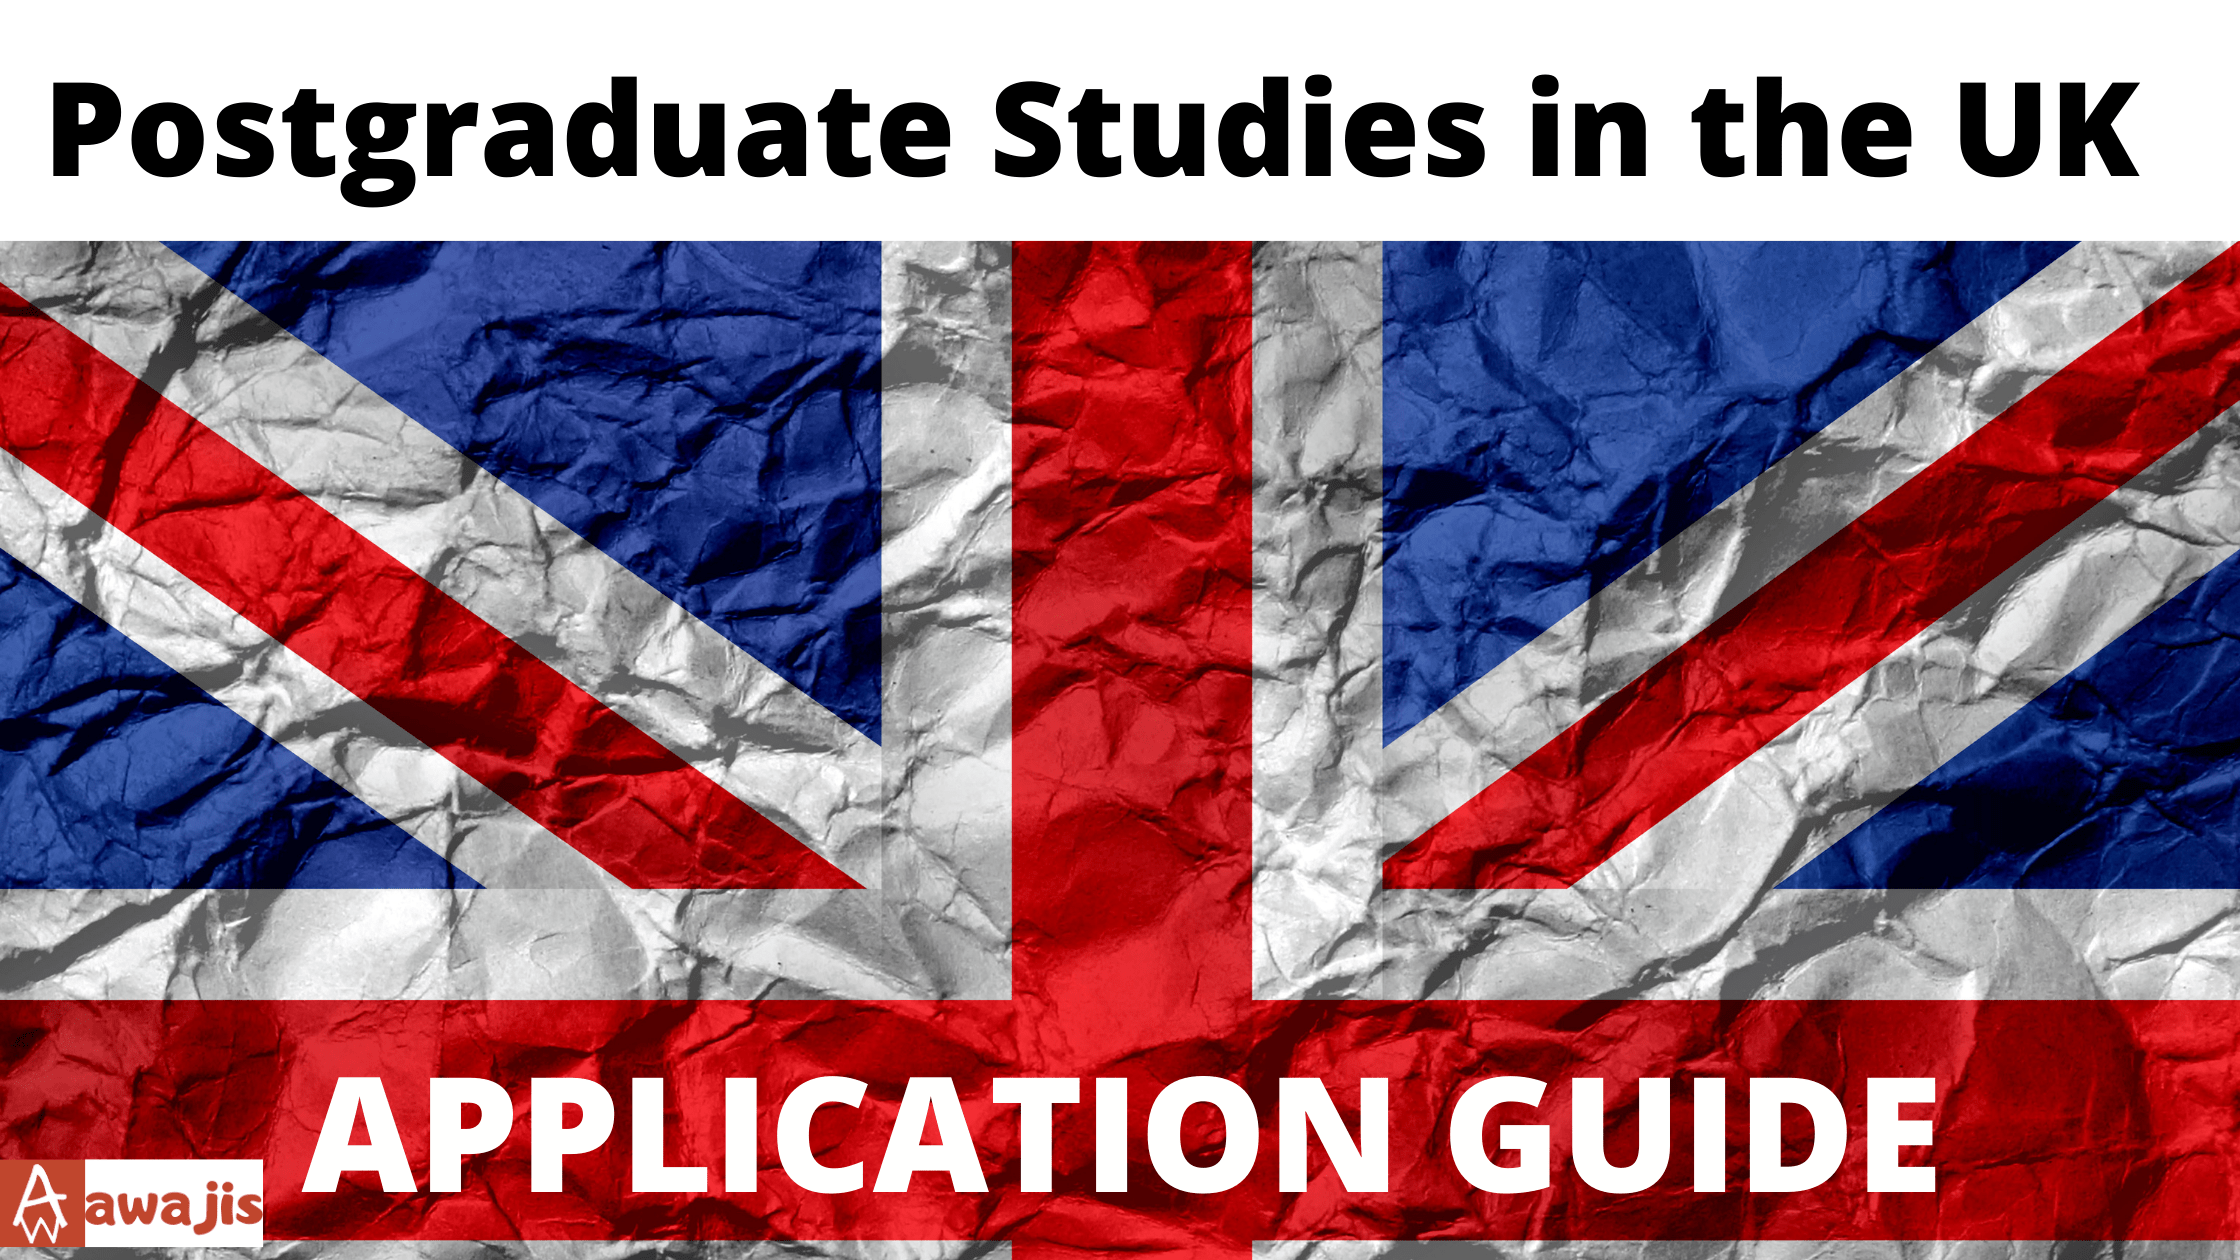 Applying for Postgraduate Studies in the UK